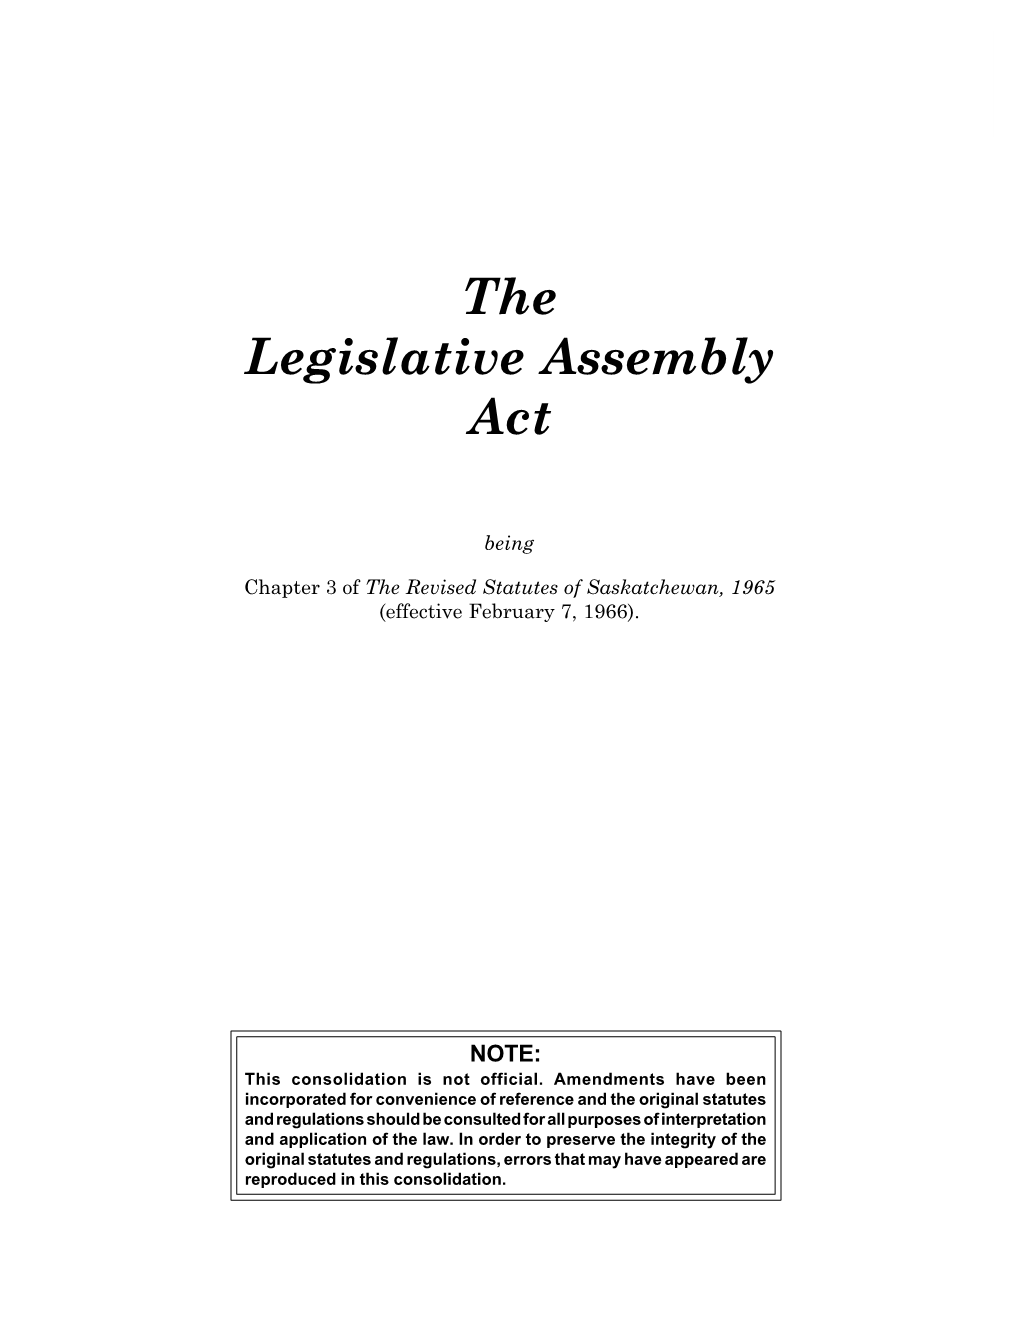 The Legislative Assembly Act